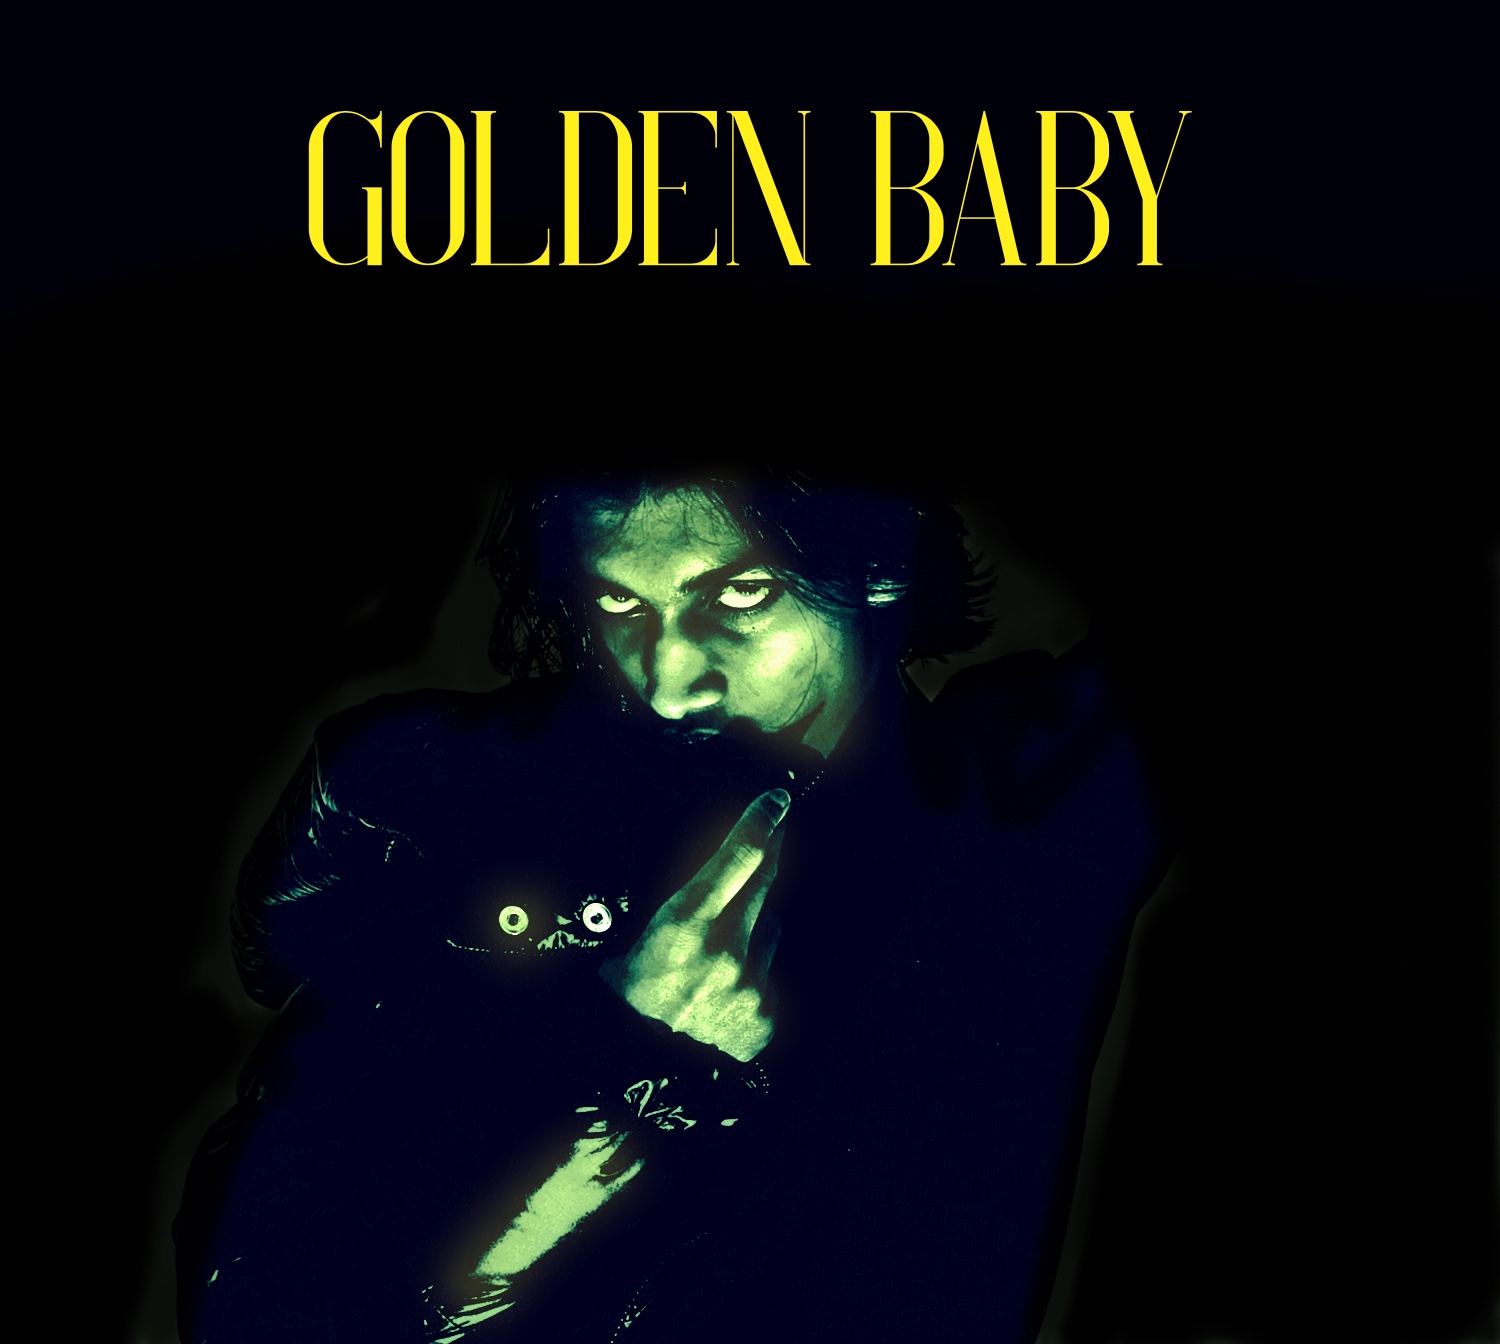 Stellan Perrick – “Golden Baby”